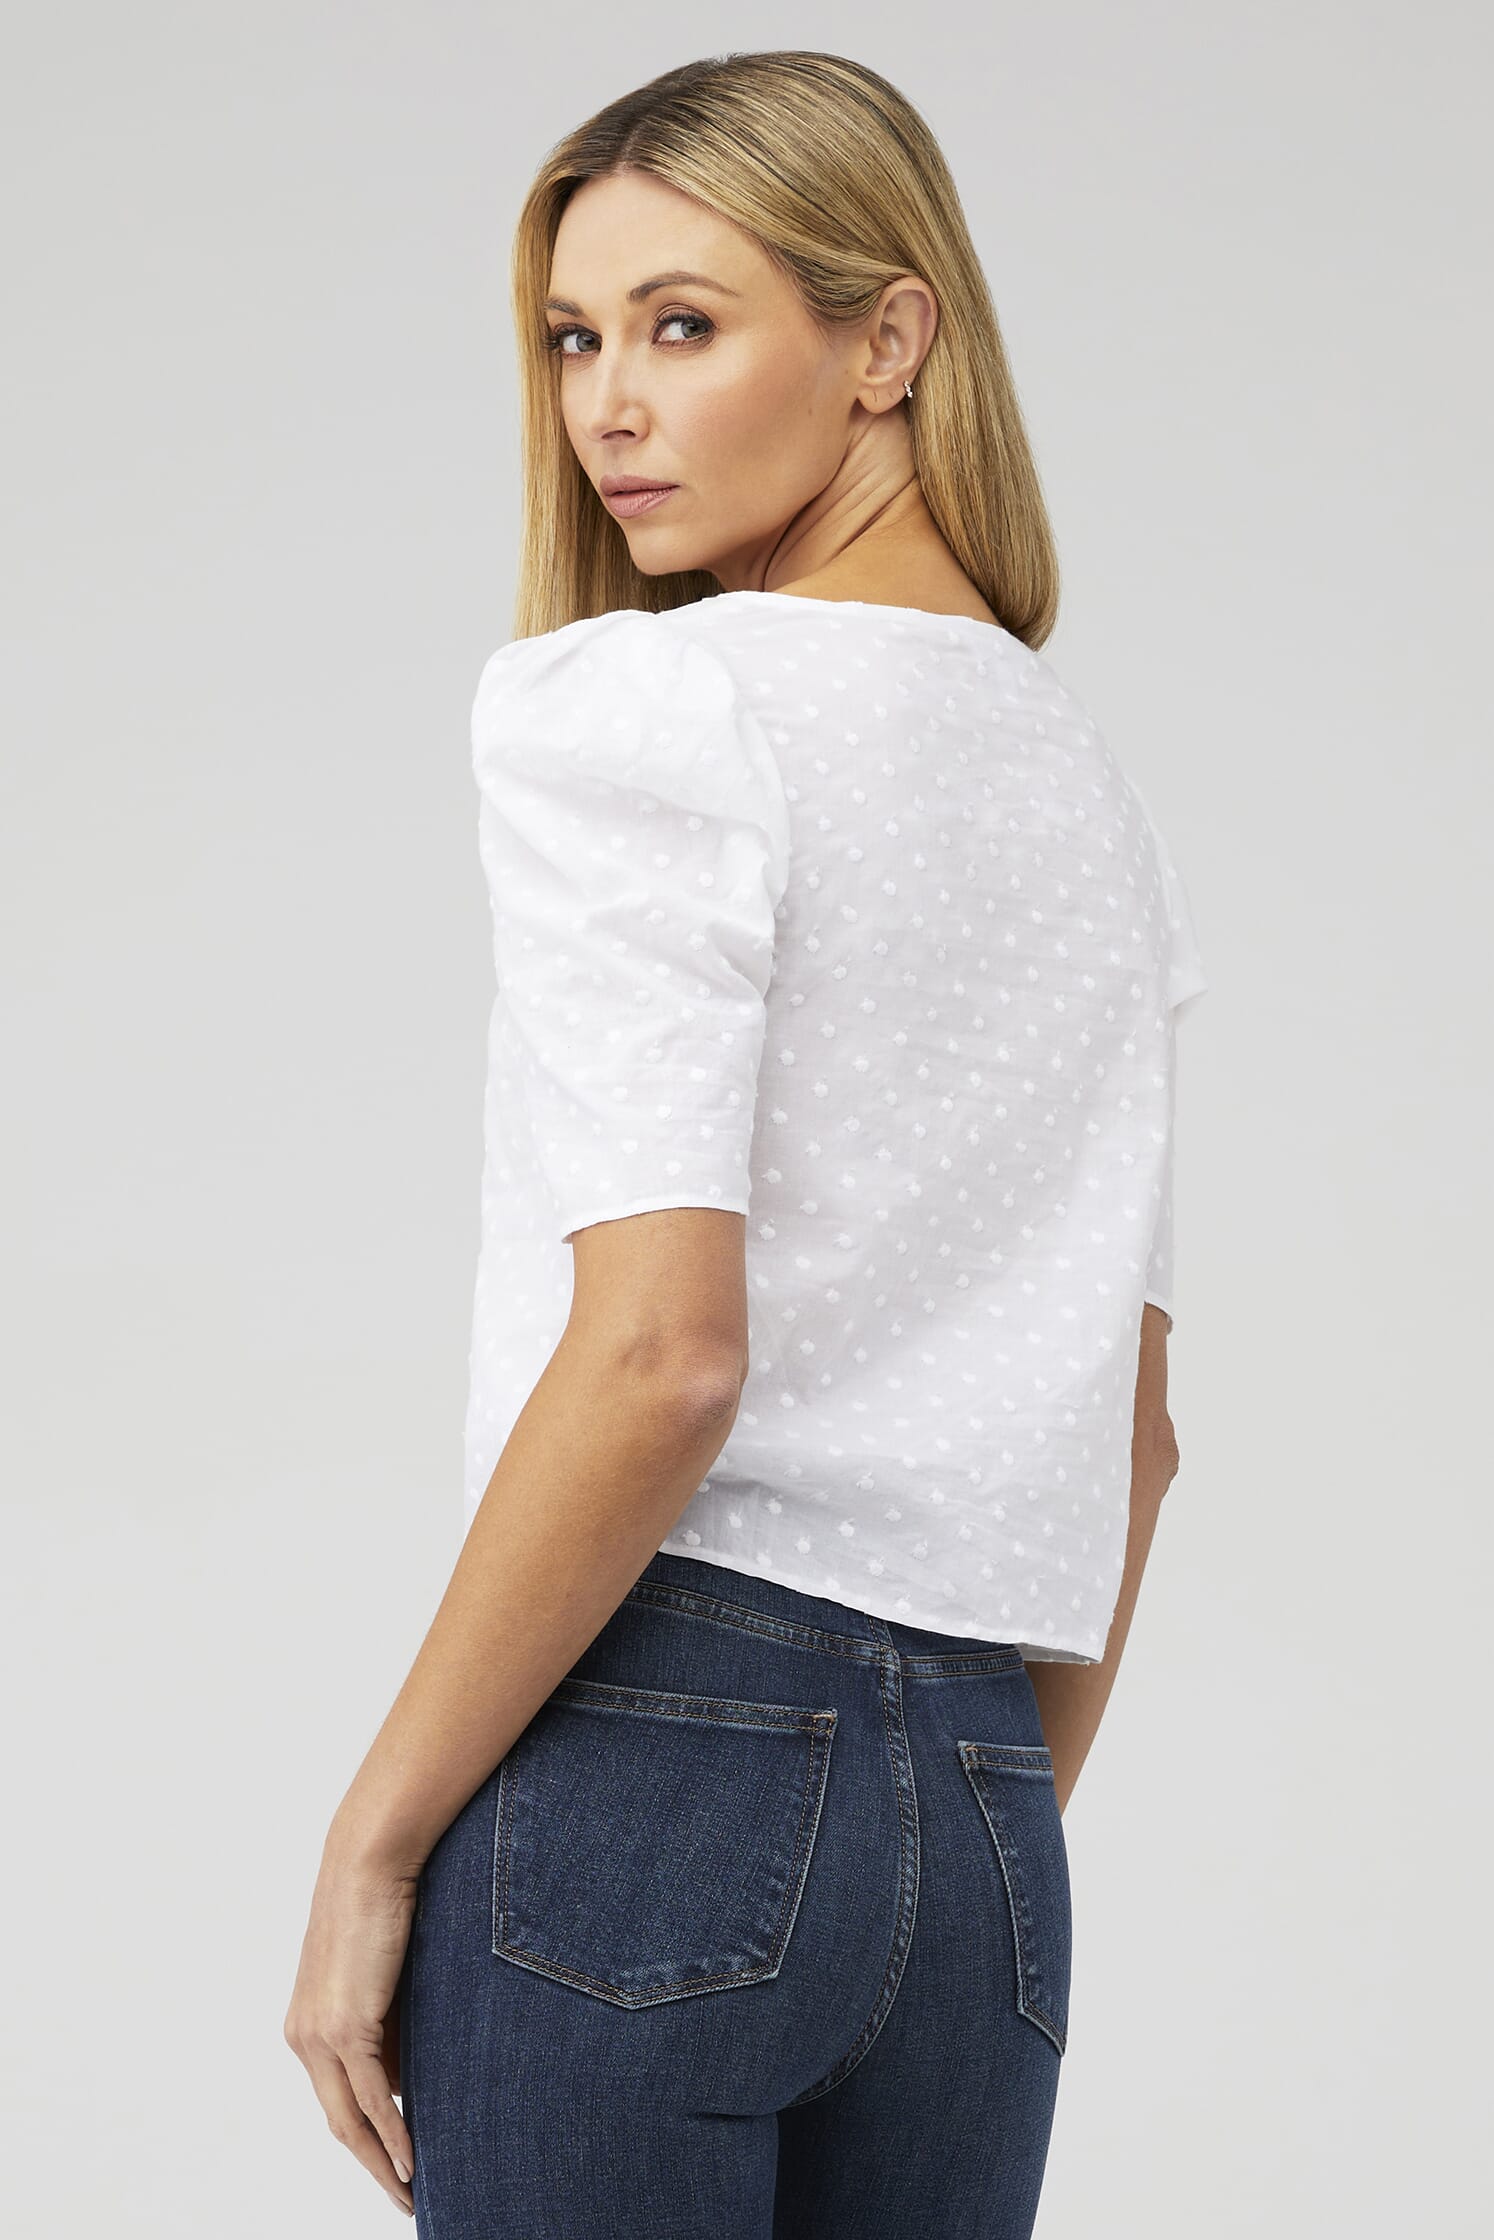 BB Dakota | Cotton Swiss Dot Puff Top in White| FashionPass